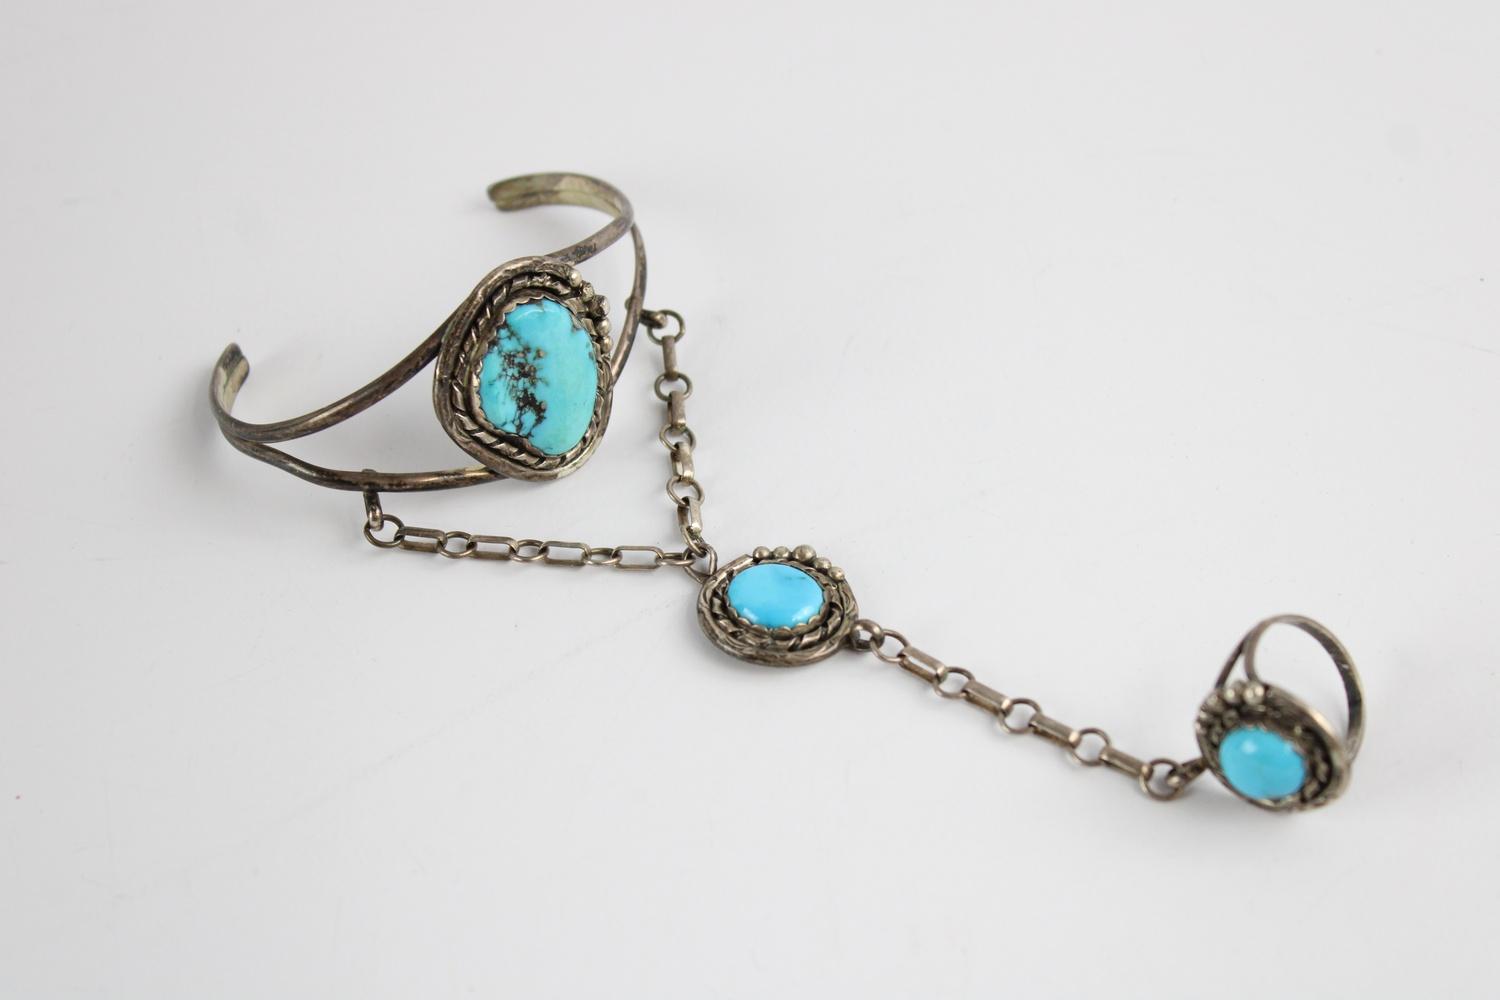 Vintage .925 sterling silver ornate navajo turquoise ring Bracelet, Ring Size N